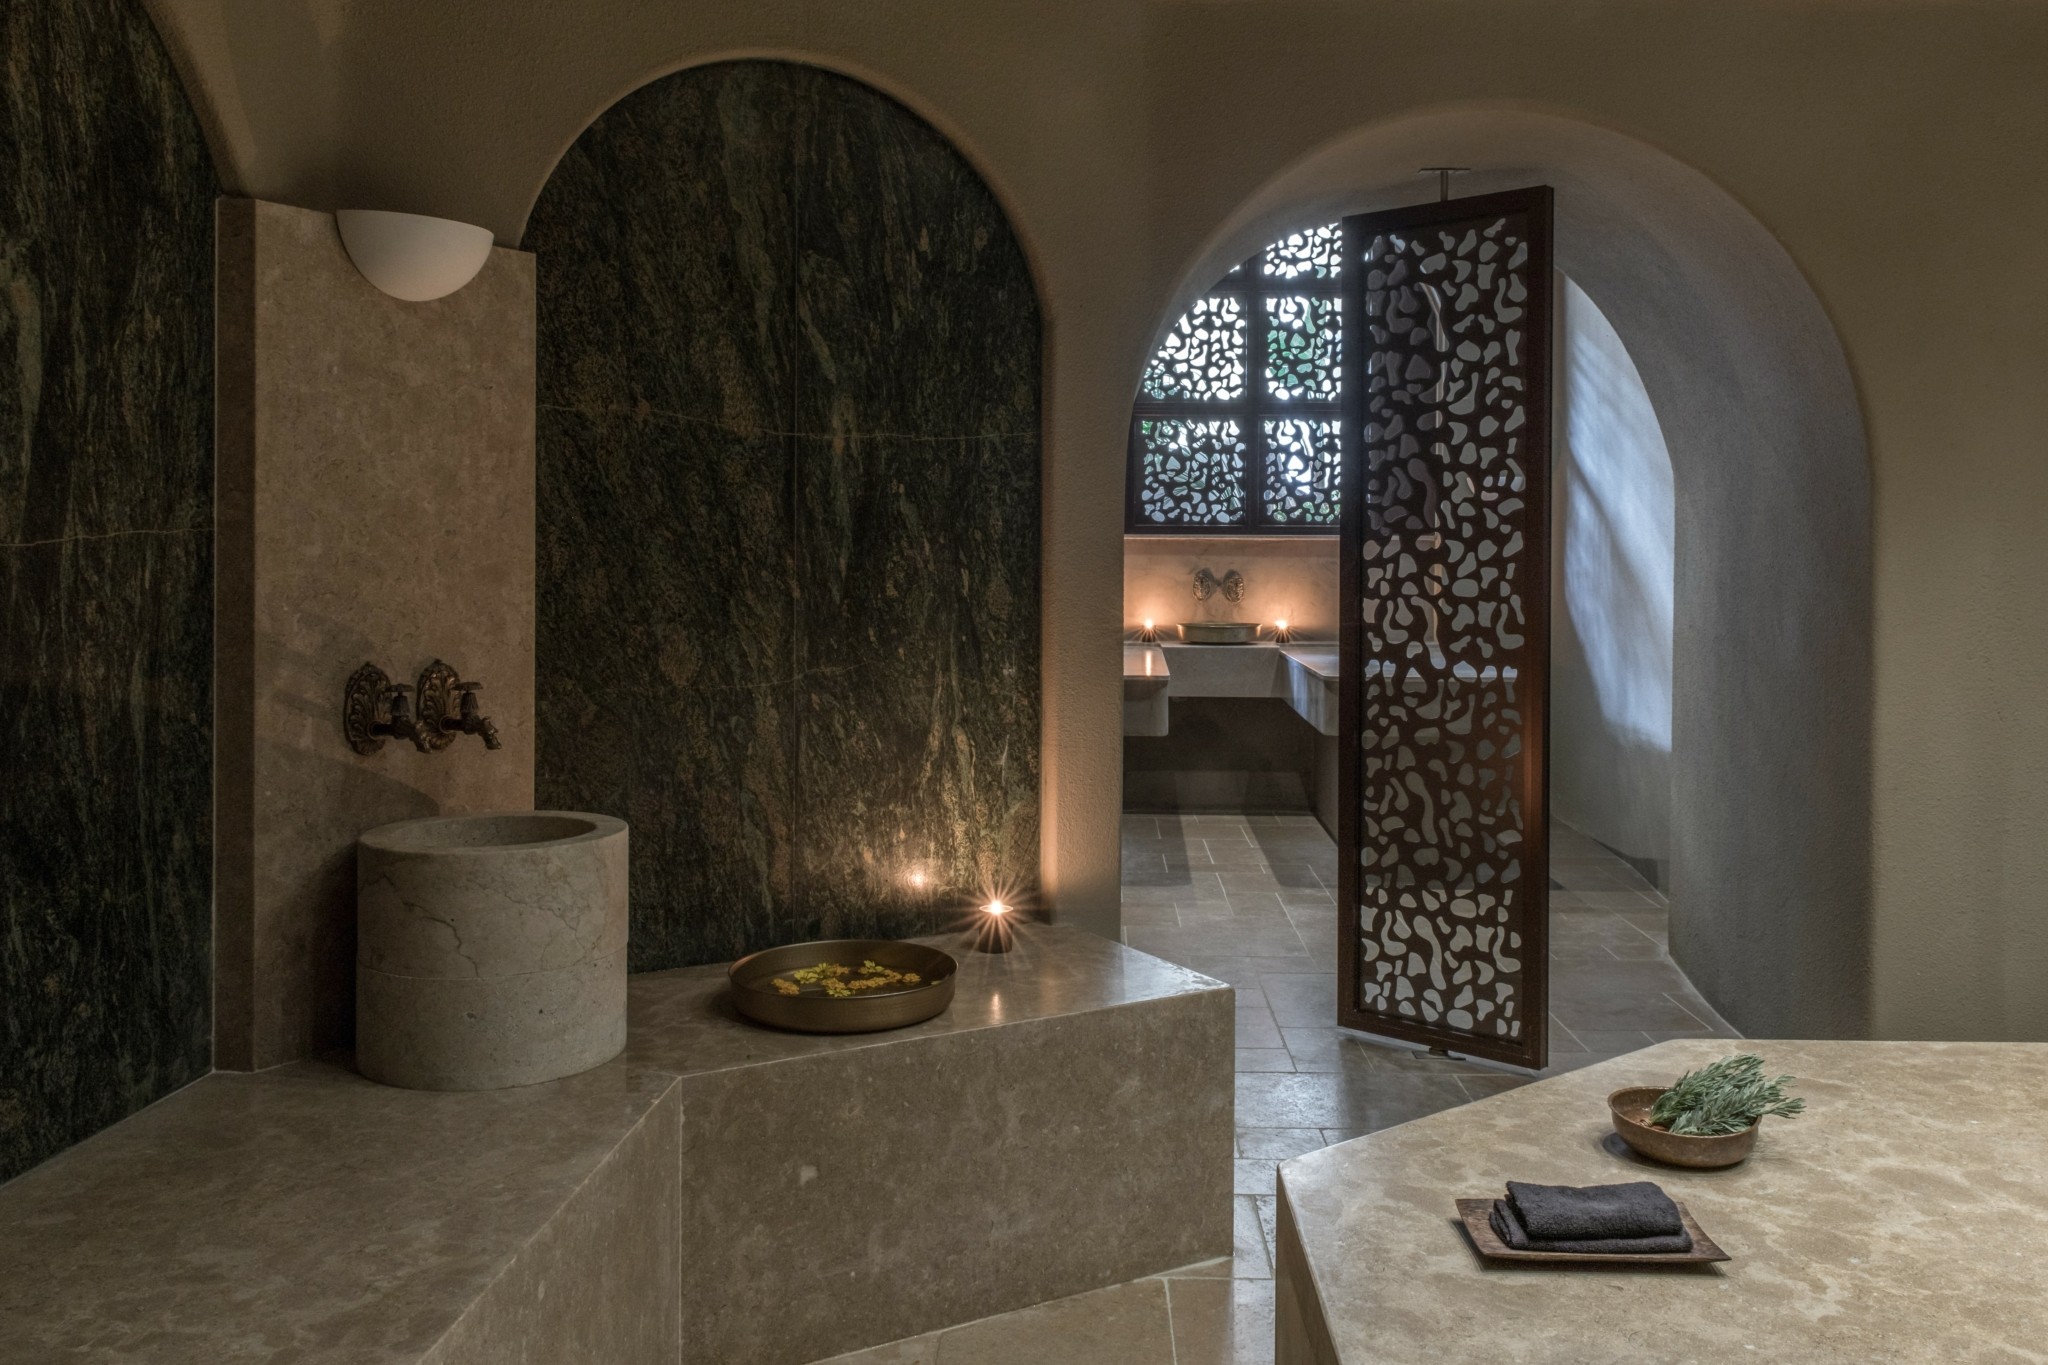 Acro Suites: Αυτό είναι το πιο θεαματικό ξενοδοχείο της Κρήτης – Στέκεται πάνω σε έναν εντυπωσιακό γκρεμό